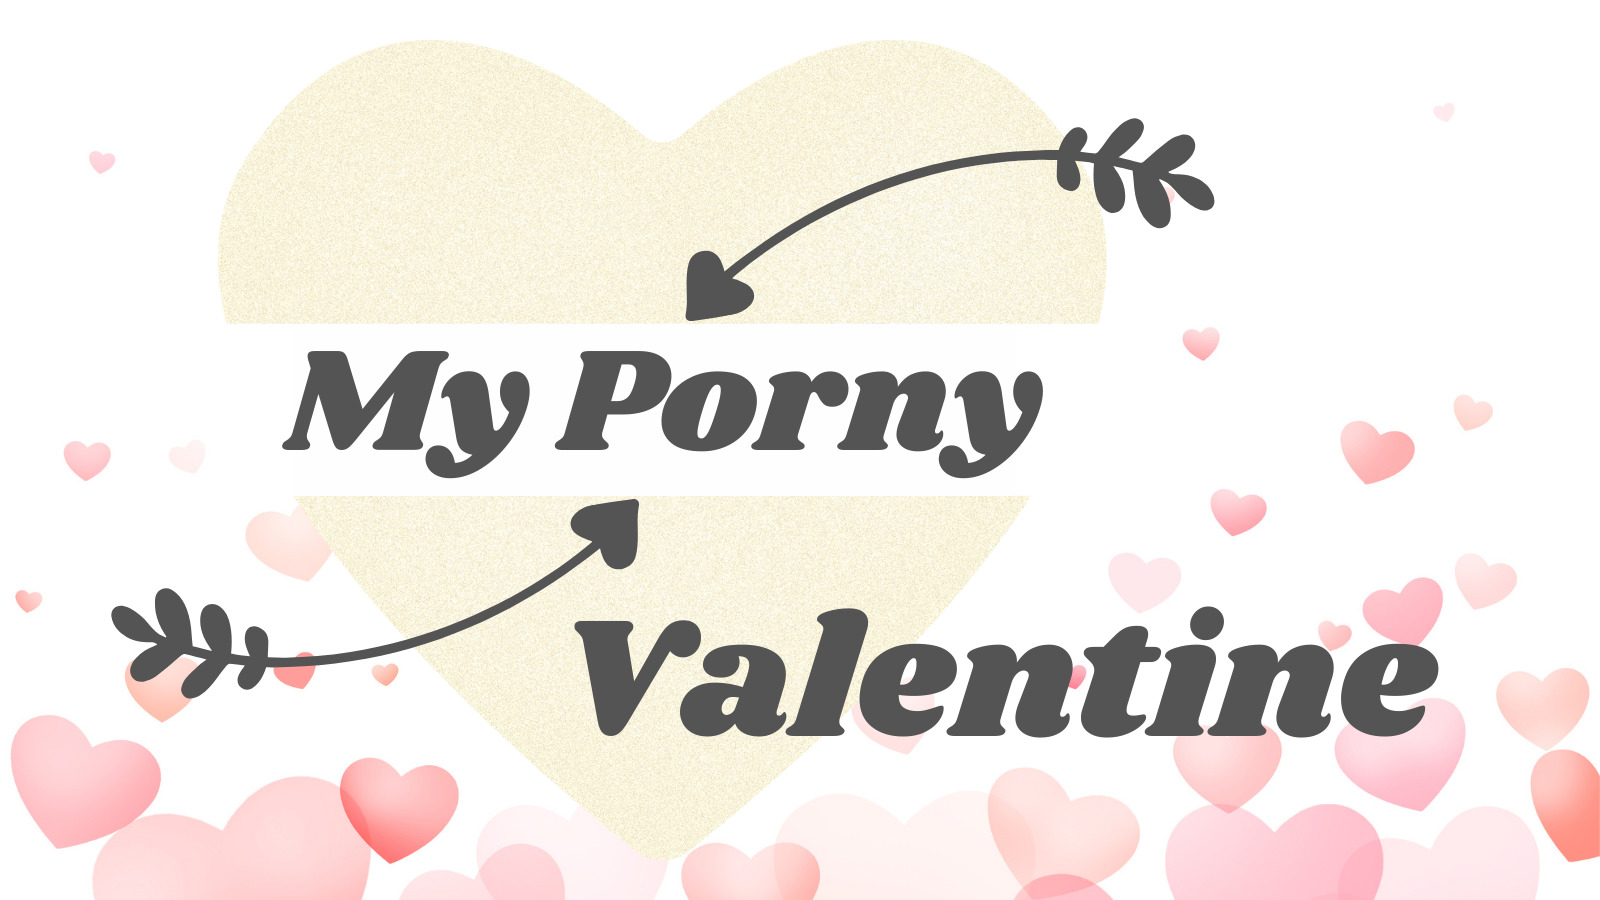 My Porny Valentine - romantic adult film guide